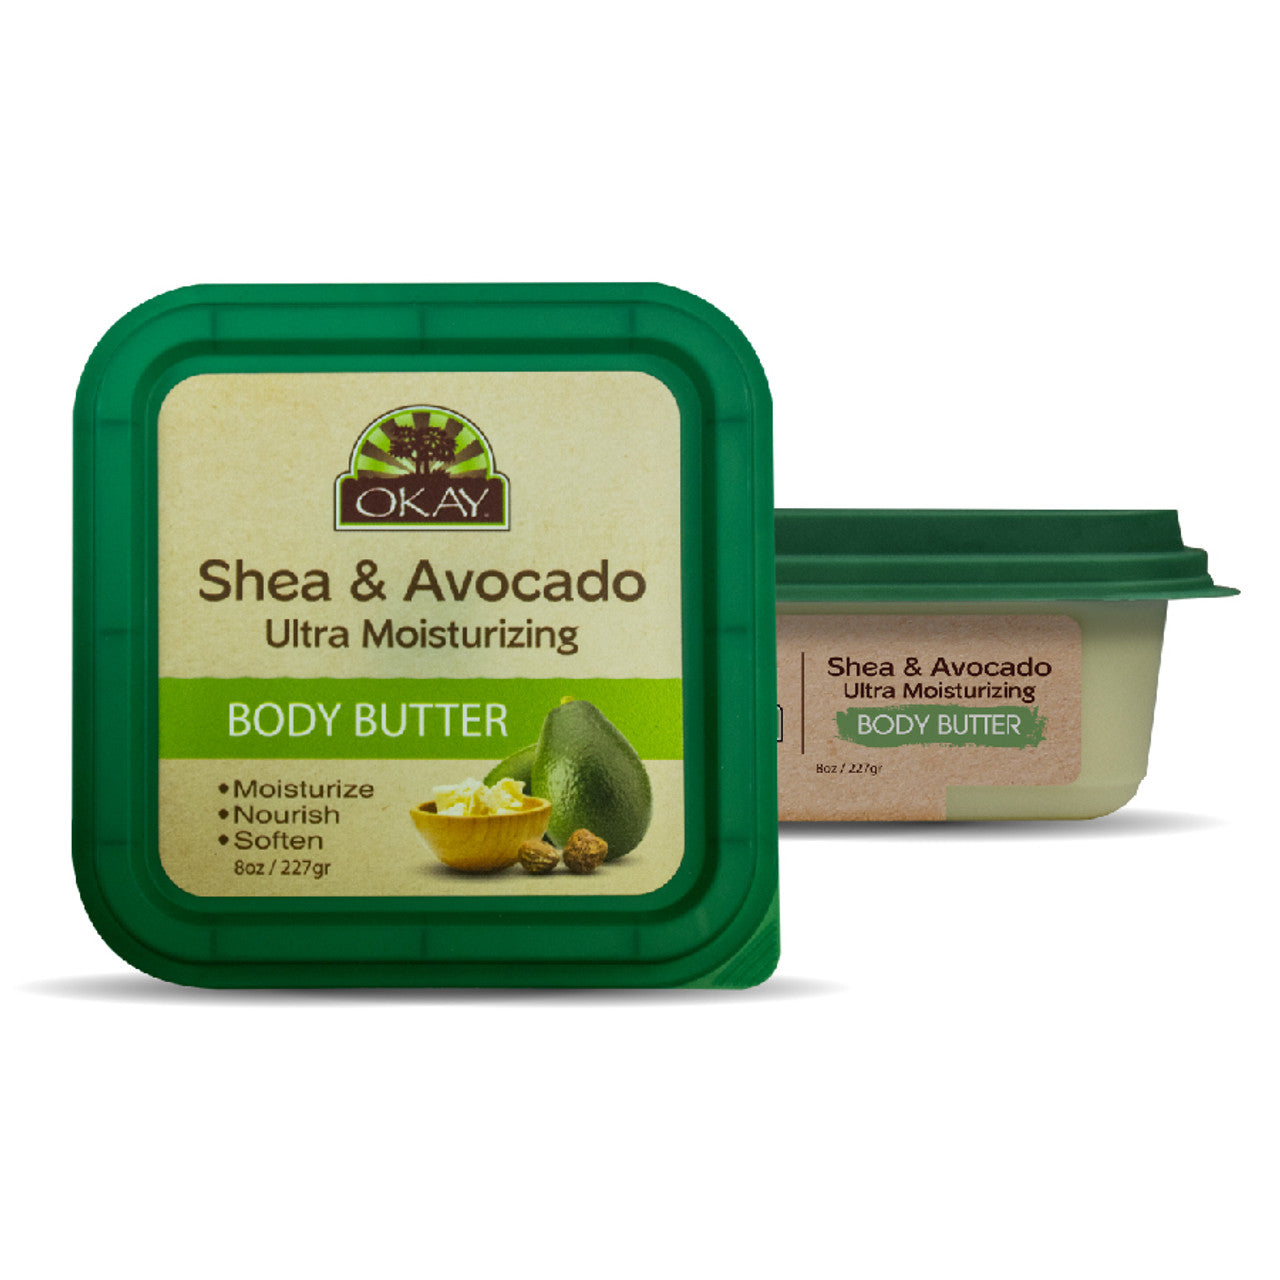 Okay Pure Naturals Shea & Avocado Ultra Moisturizing Body Butter 7oz